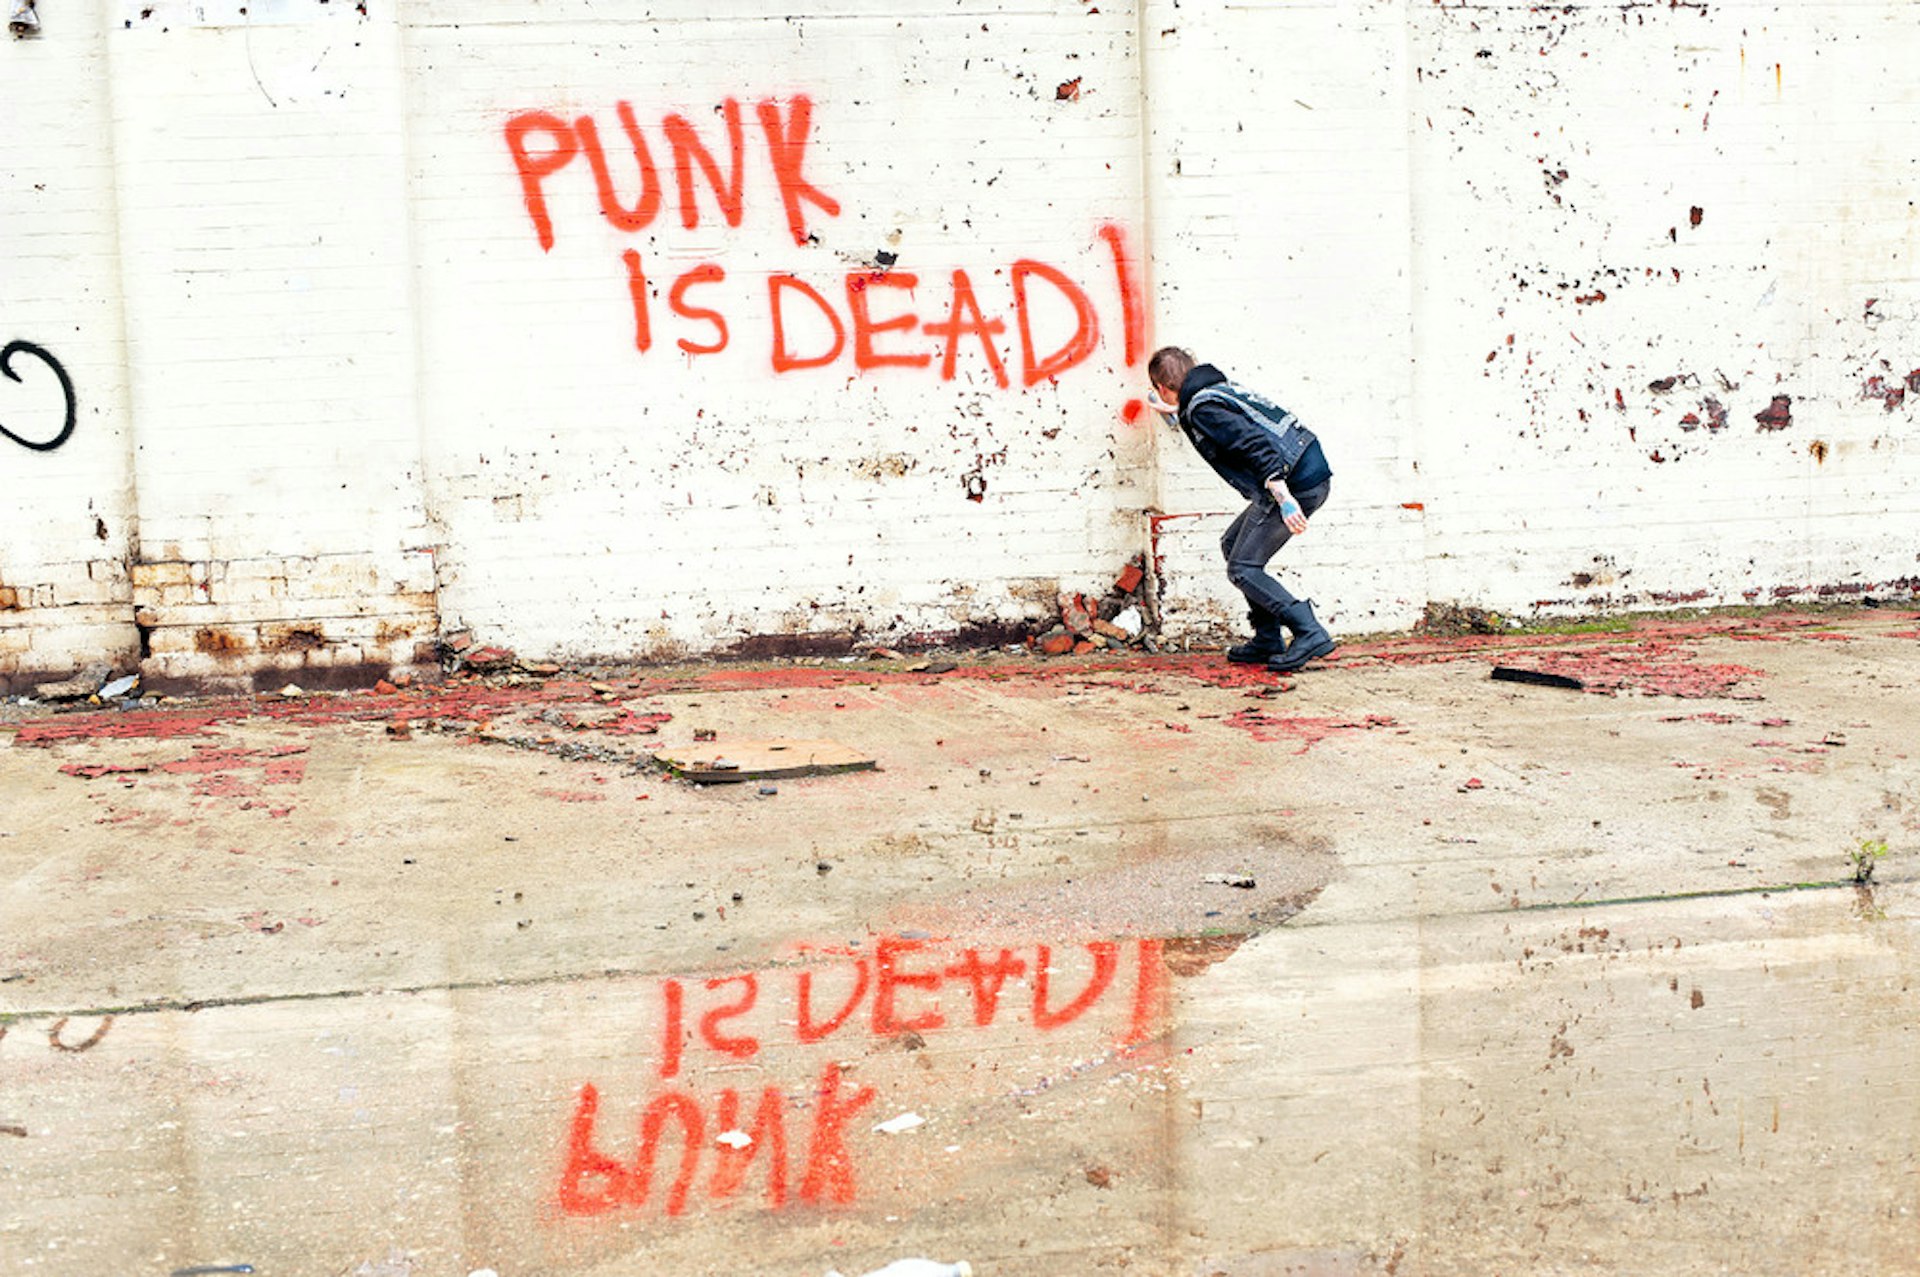 punk+is+dead!+print+copy